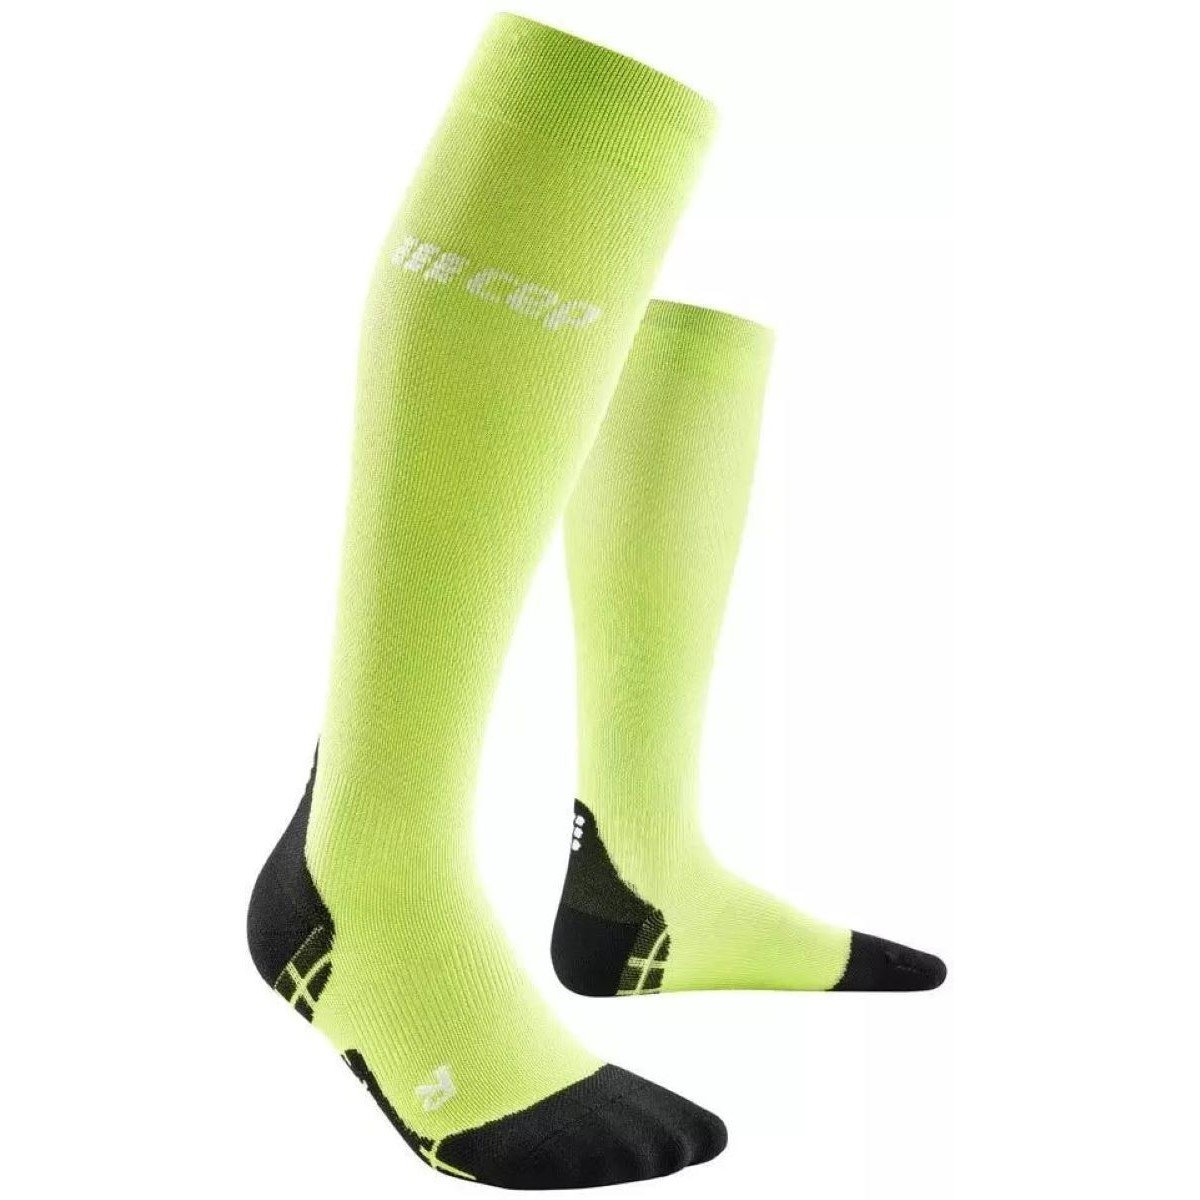 1280x1280_Run-Ultralight-Socks-Tall-flash-green-black-WP20CY-WP30CY-front